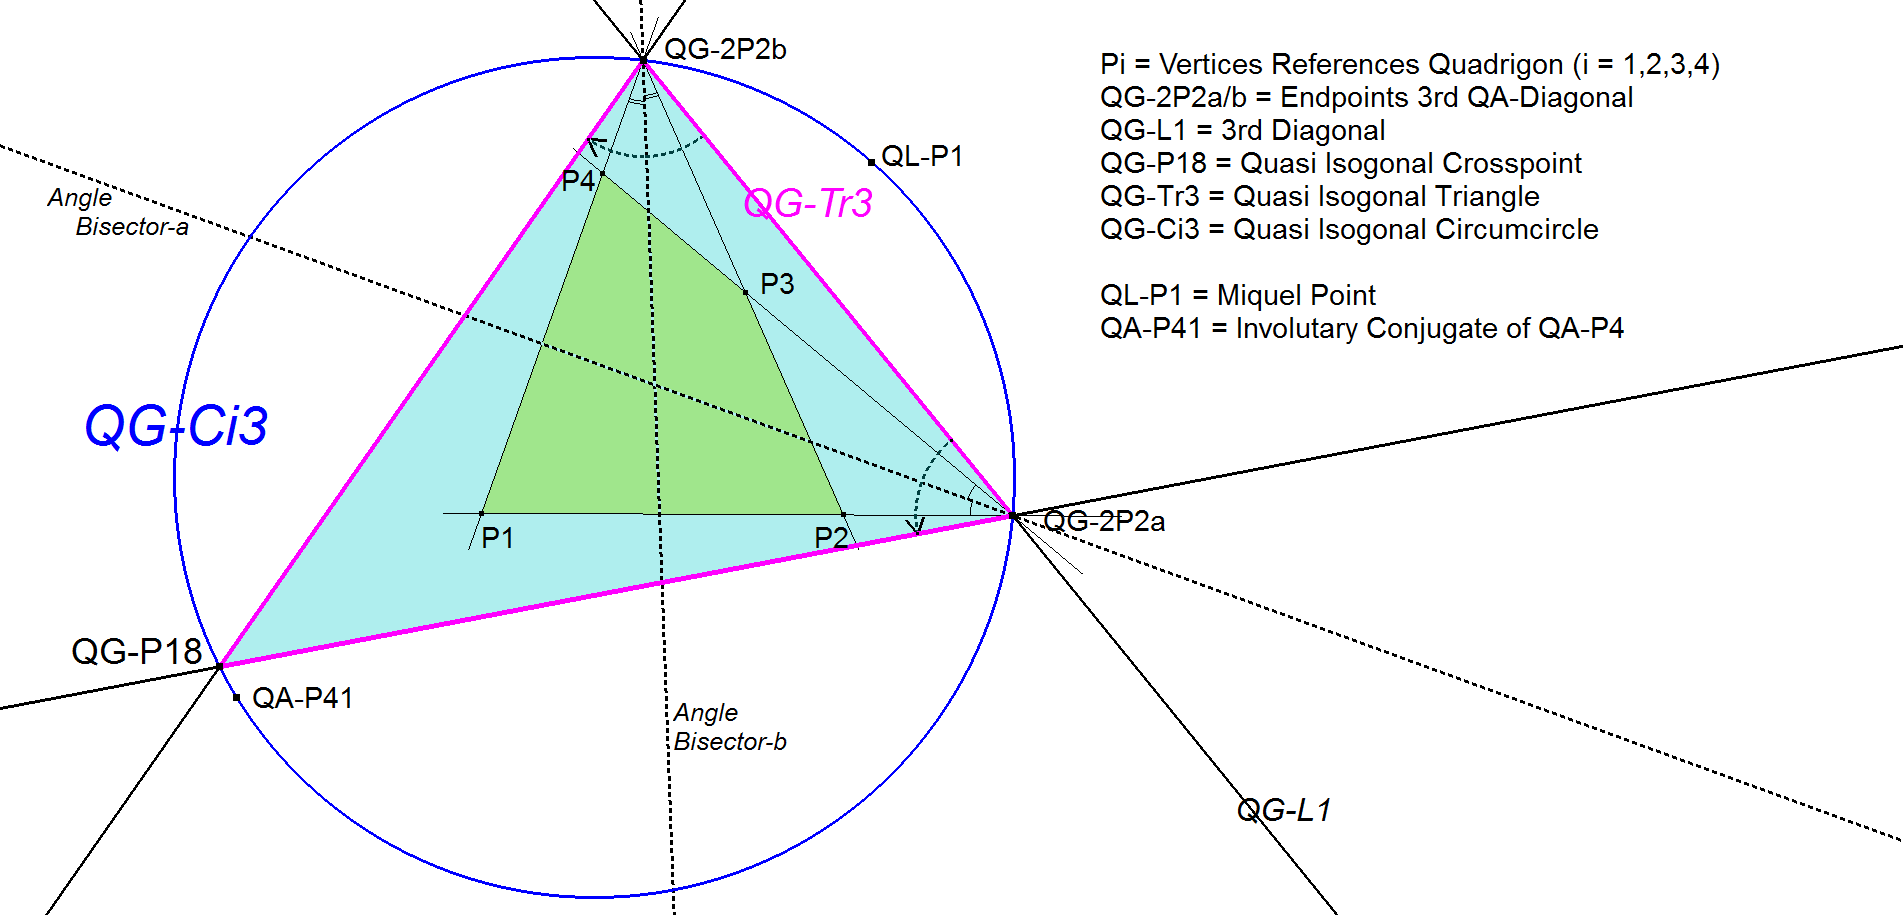 QG-Ci3-Quasi Isogonal Circumcircle-01